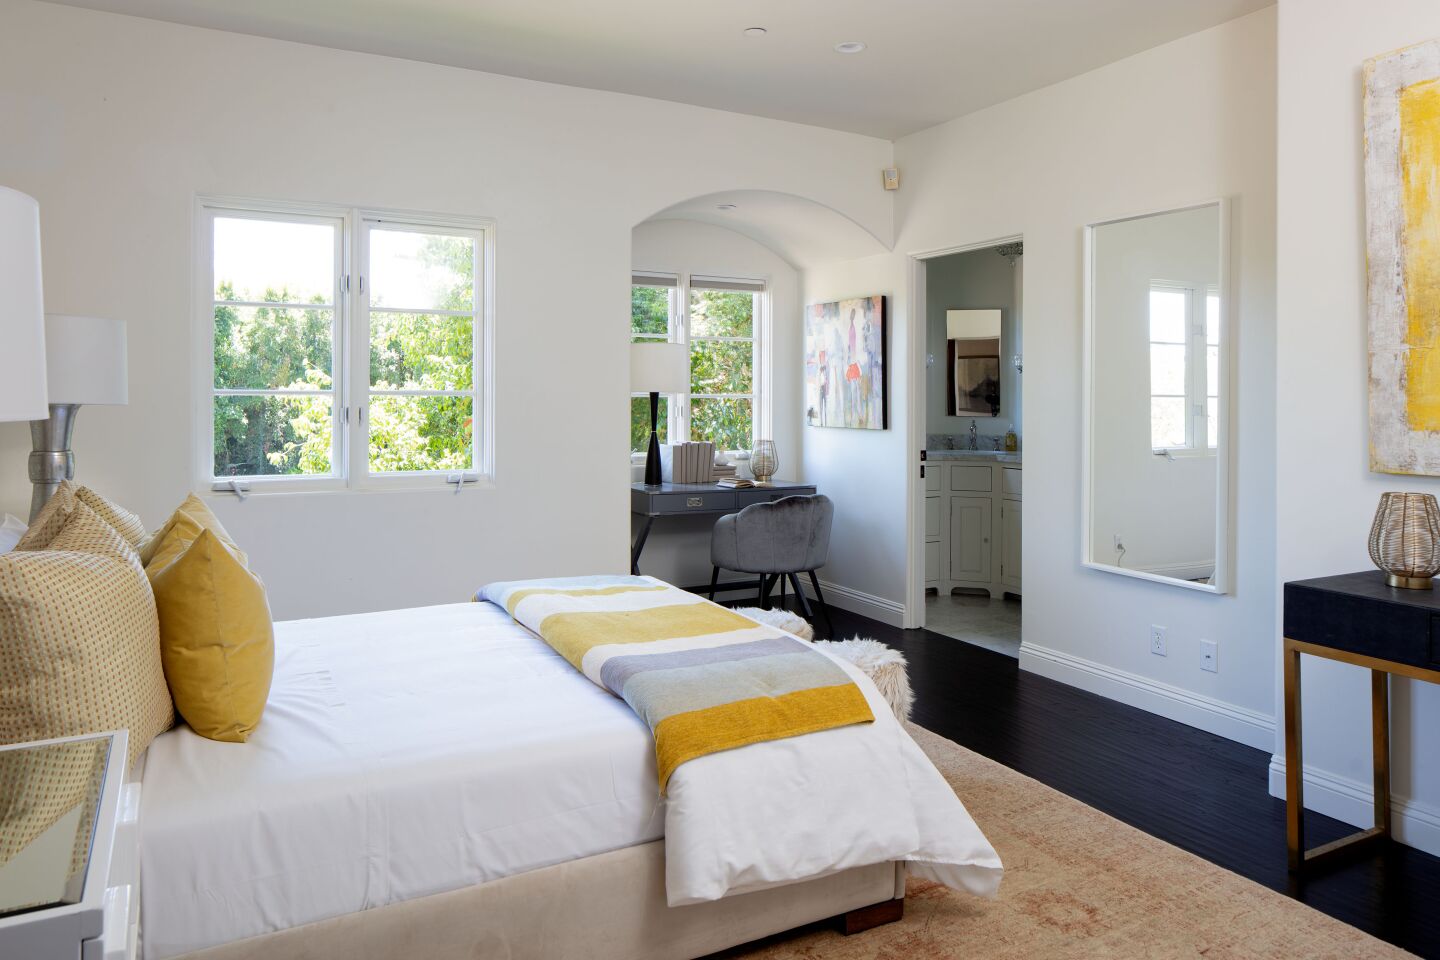 Geena Davis' Pacific Palisades house: a bedroom